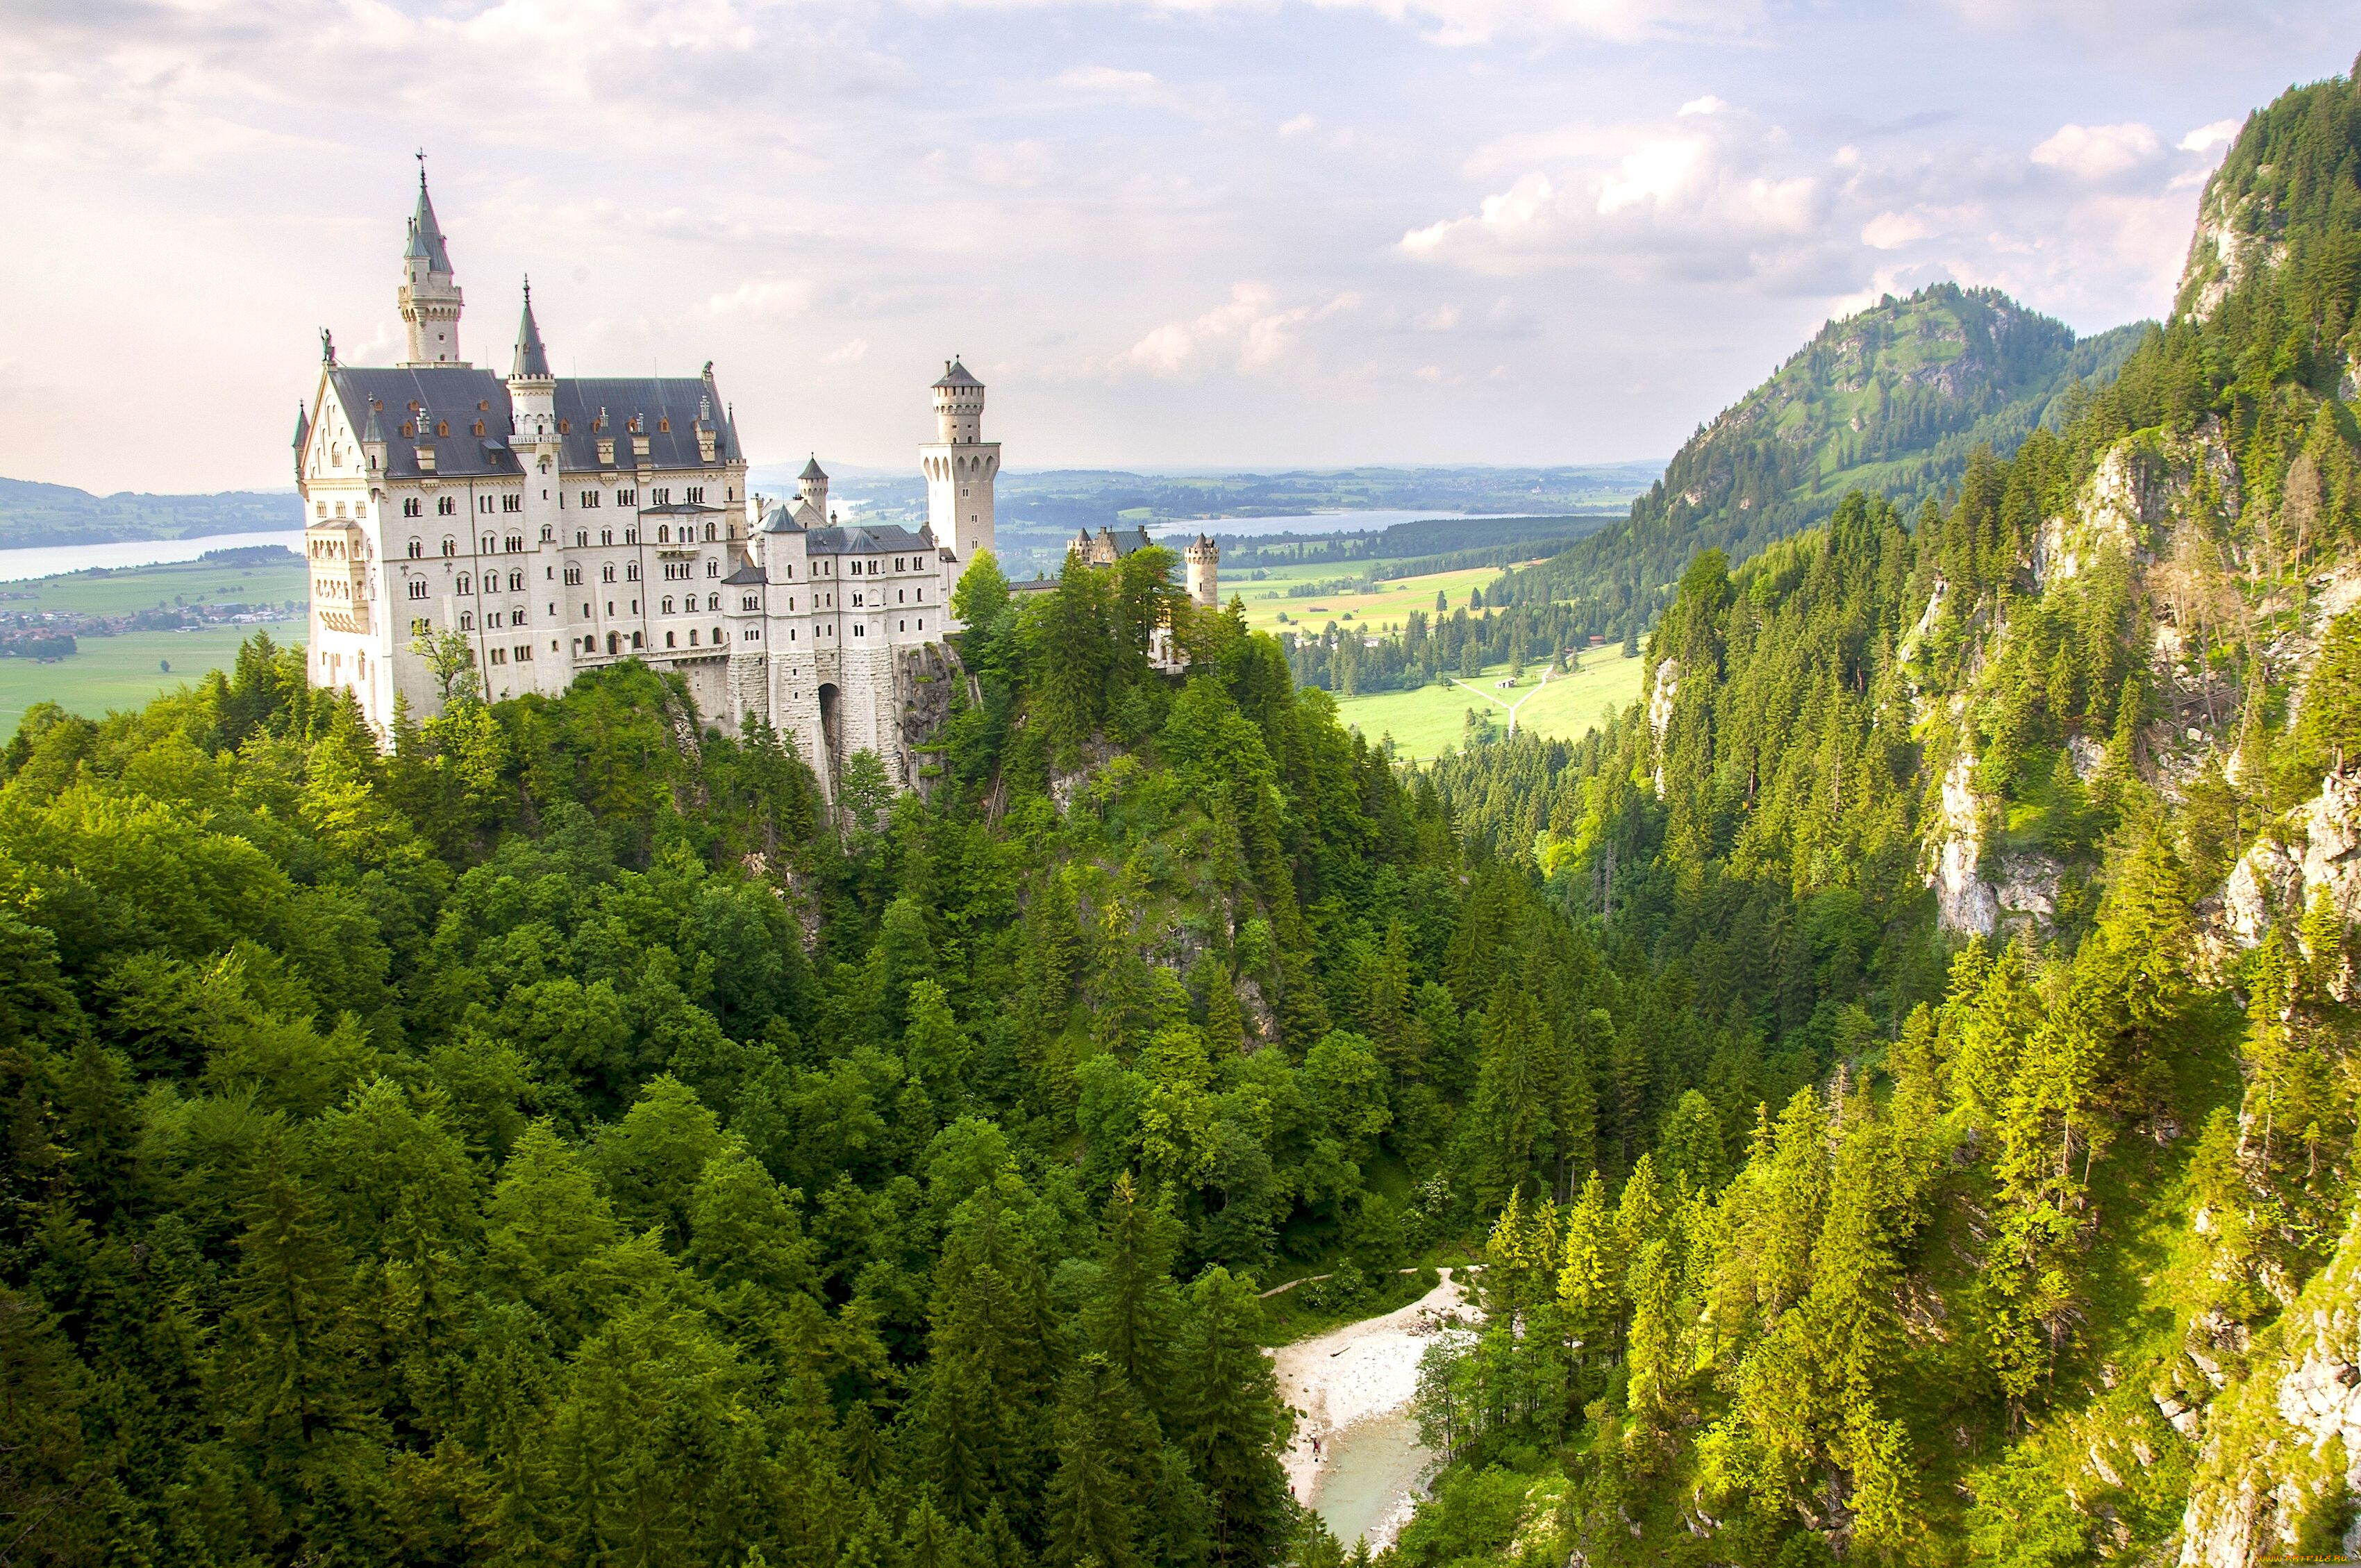 neuschwanstein, castle, bavaria, germany, города, замок, нойшванштайн, германия, лес, горы, бавария, панорама